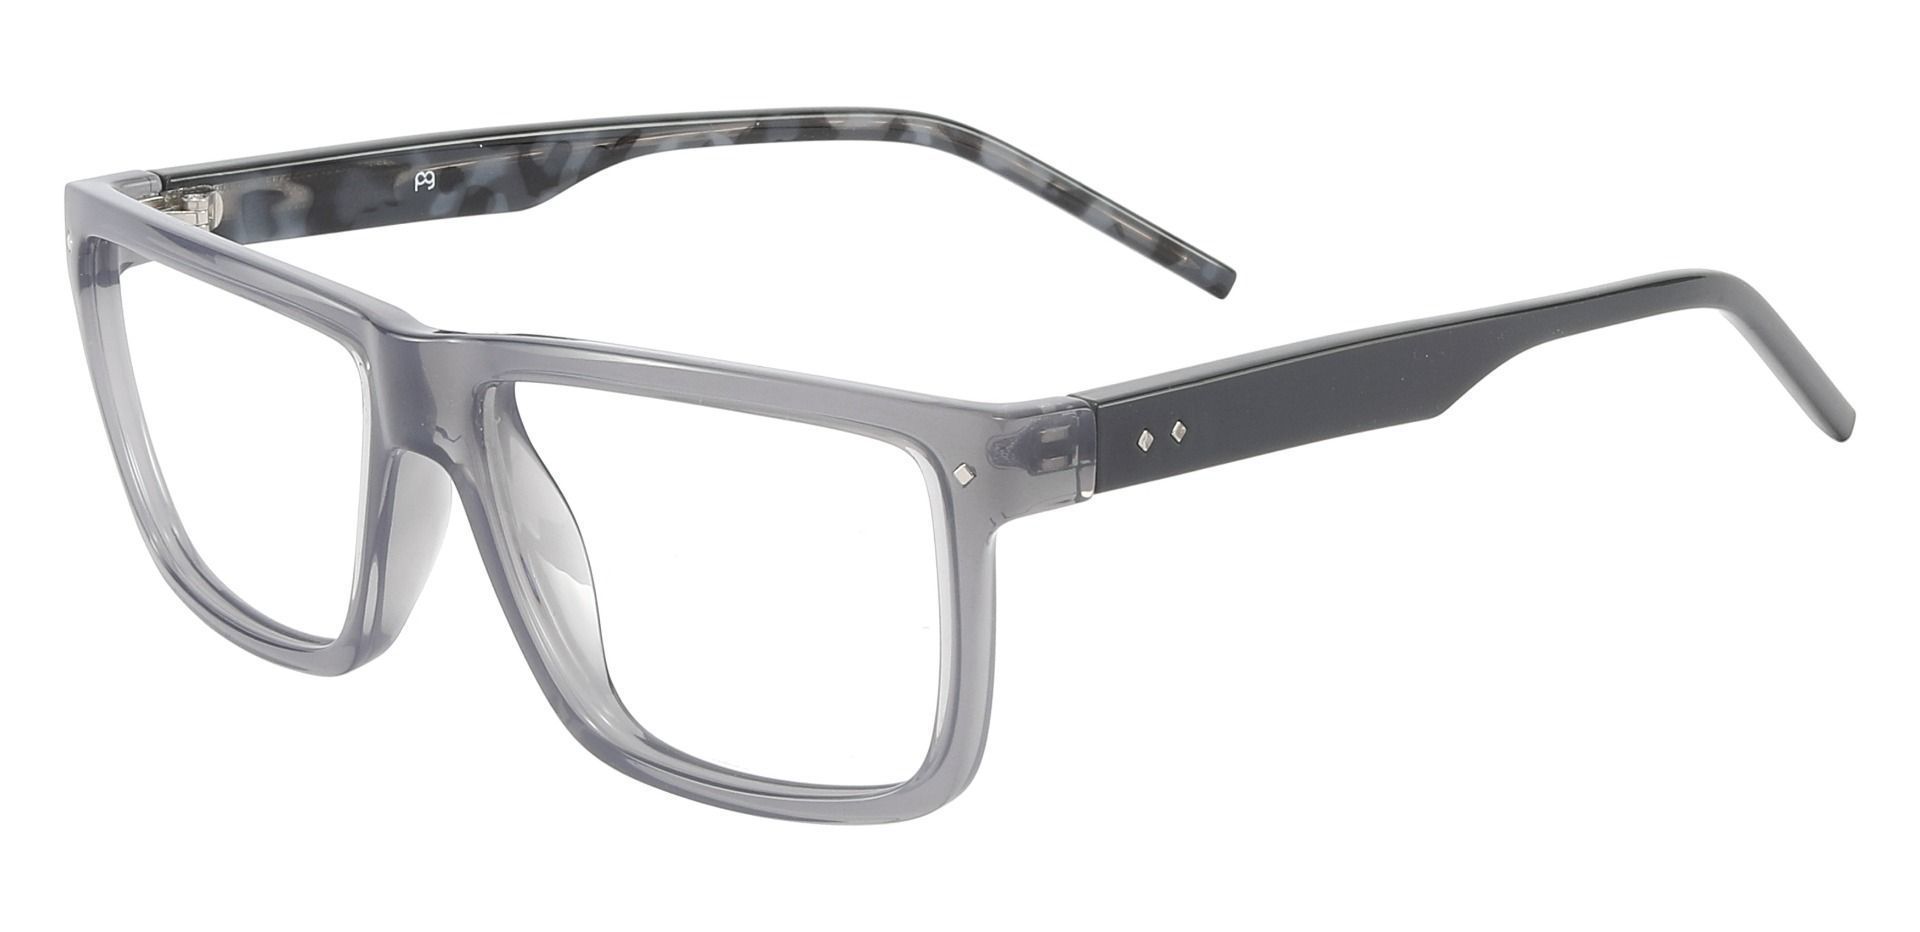 Carey Rectangle Eyeglasses Frame - Gray